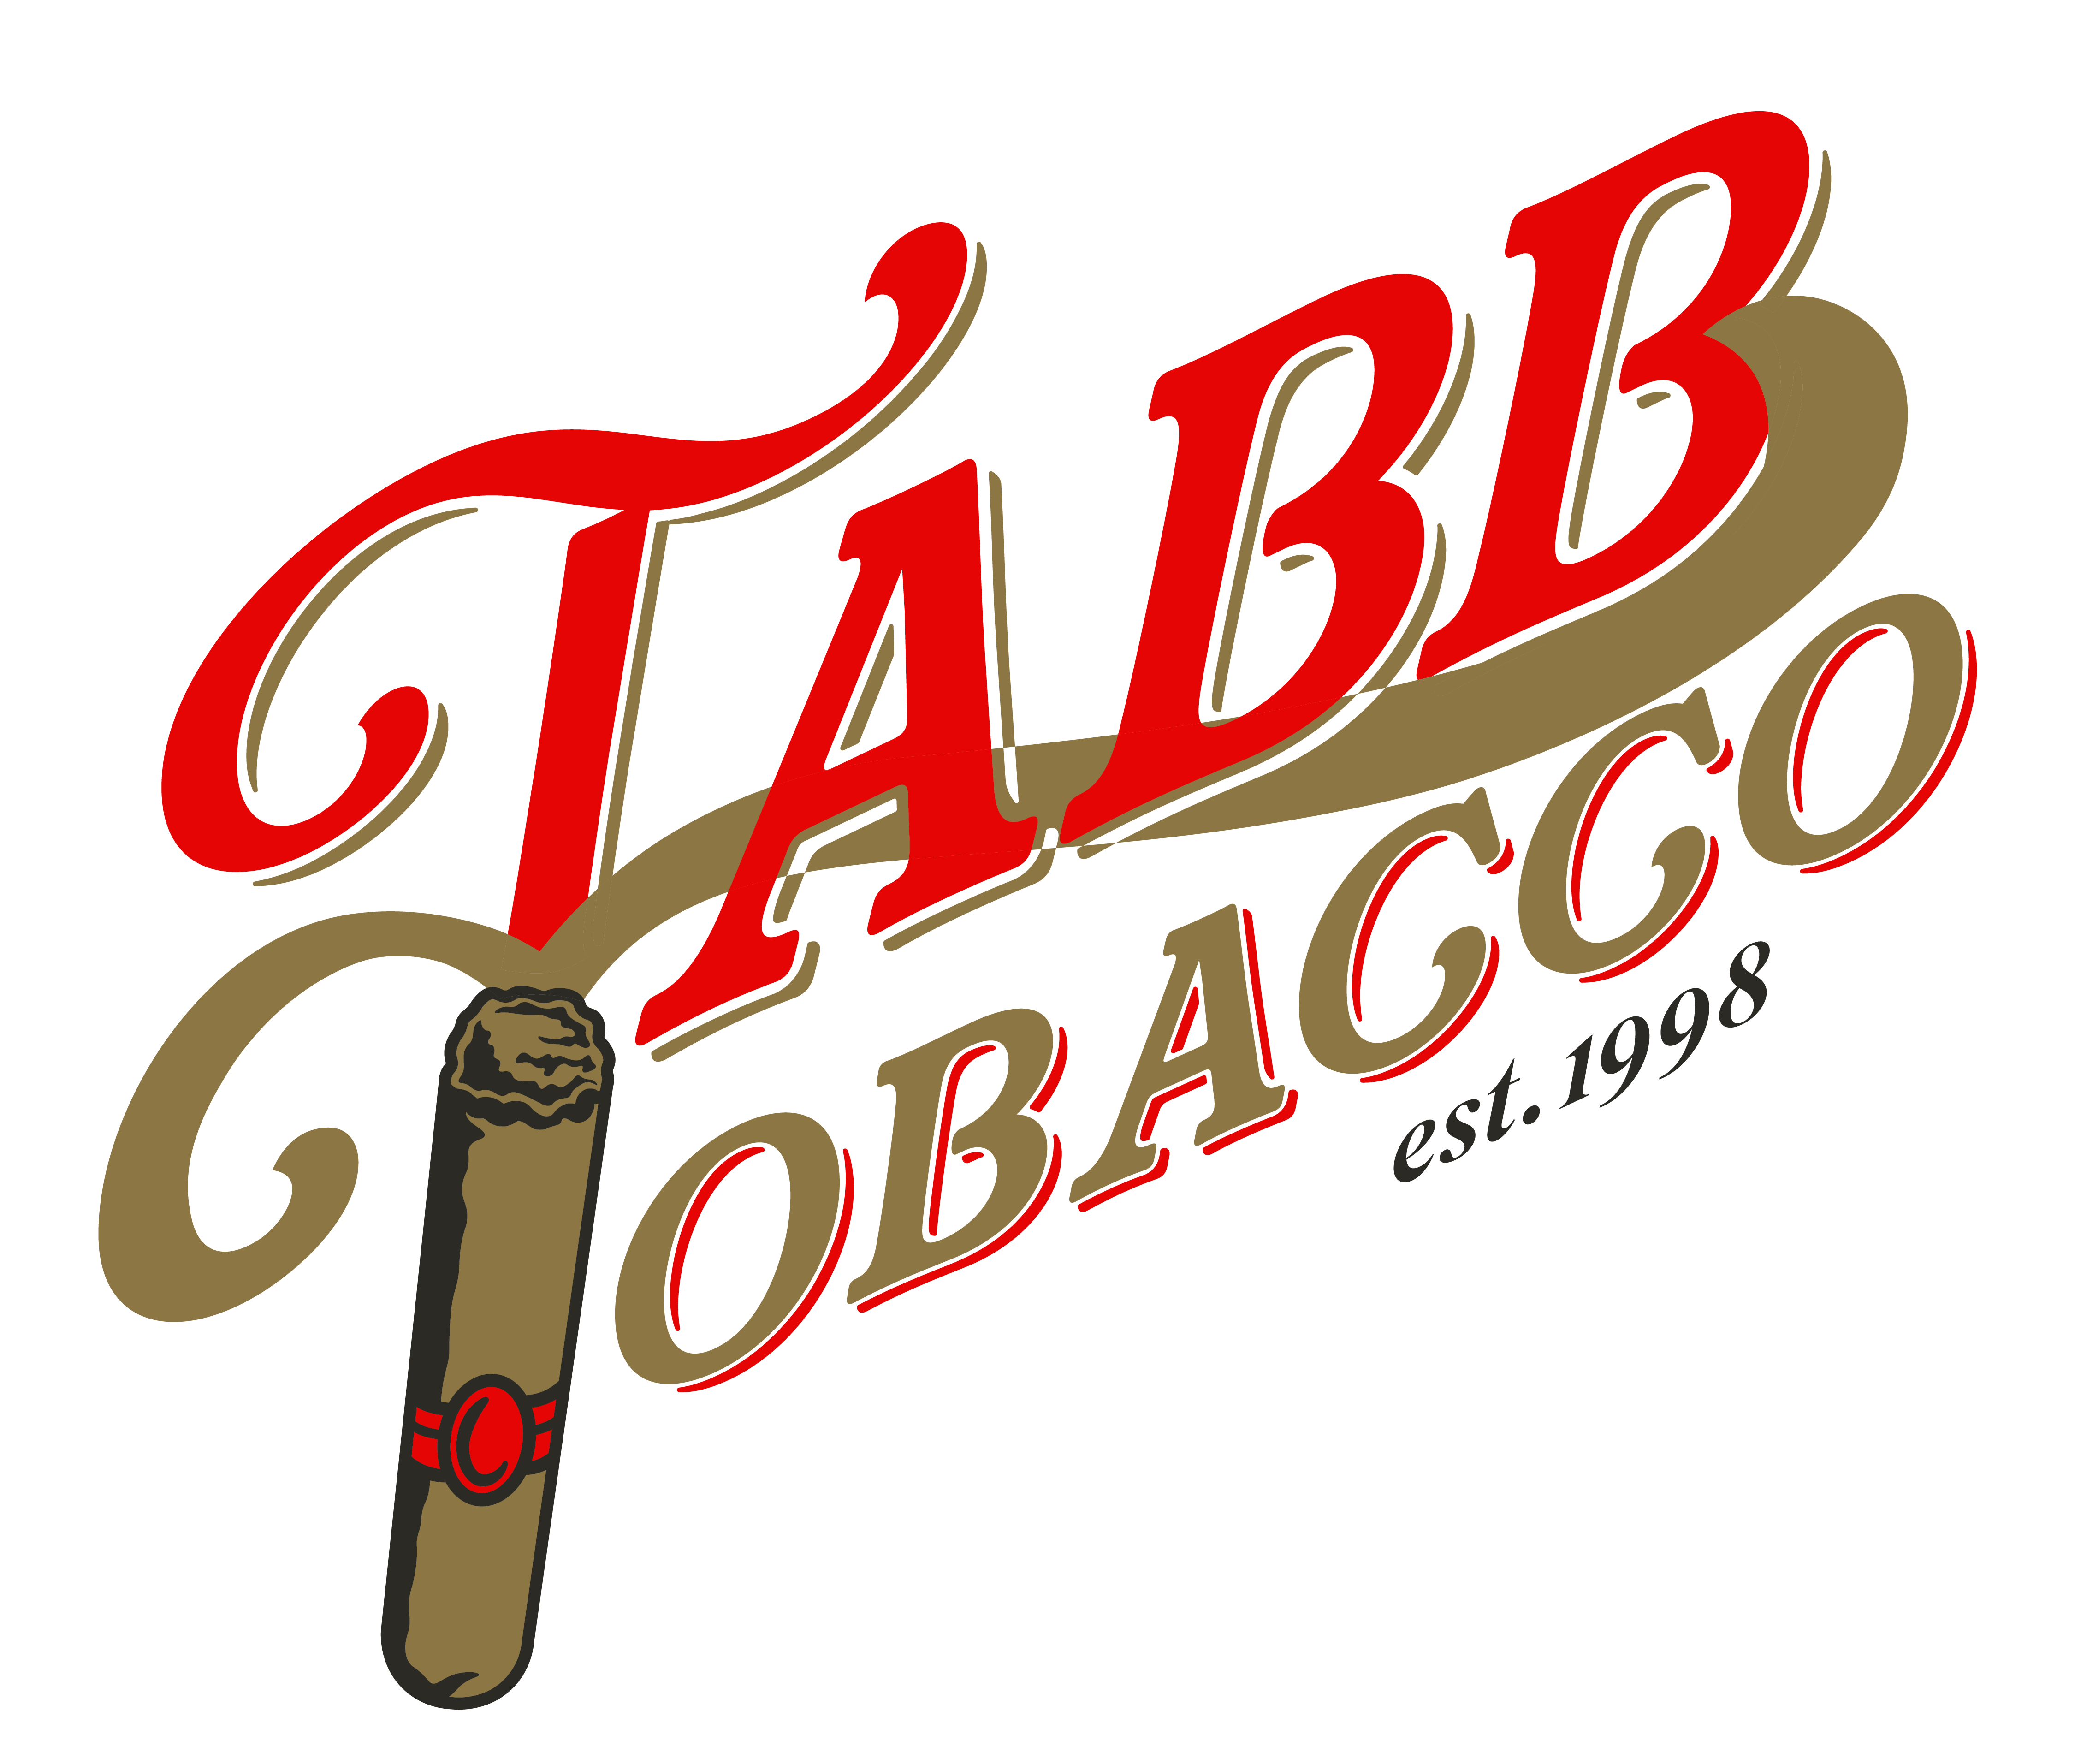 Tabb Tobacco